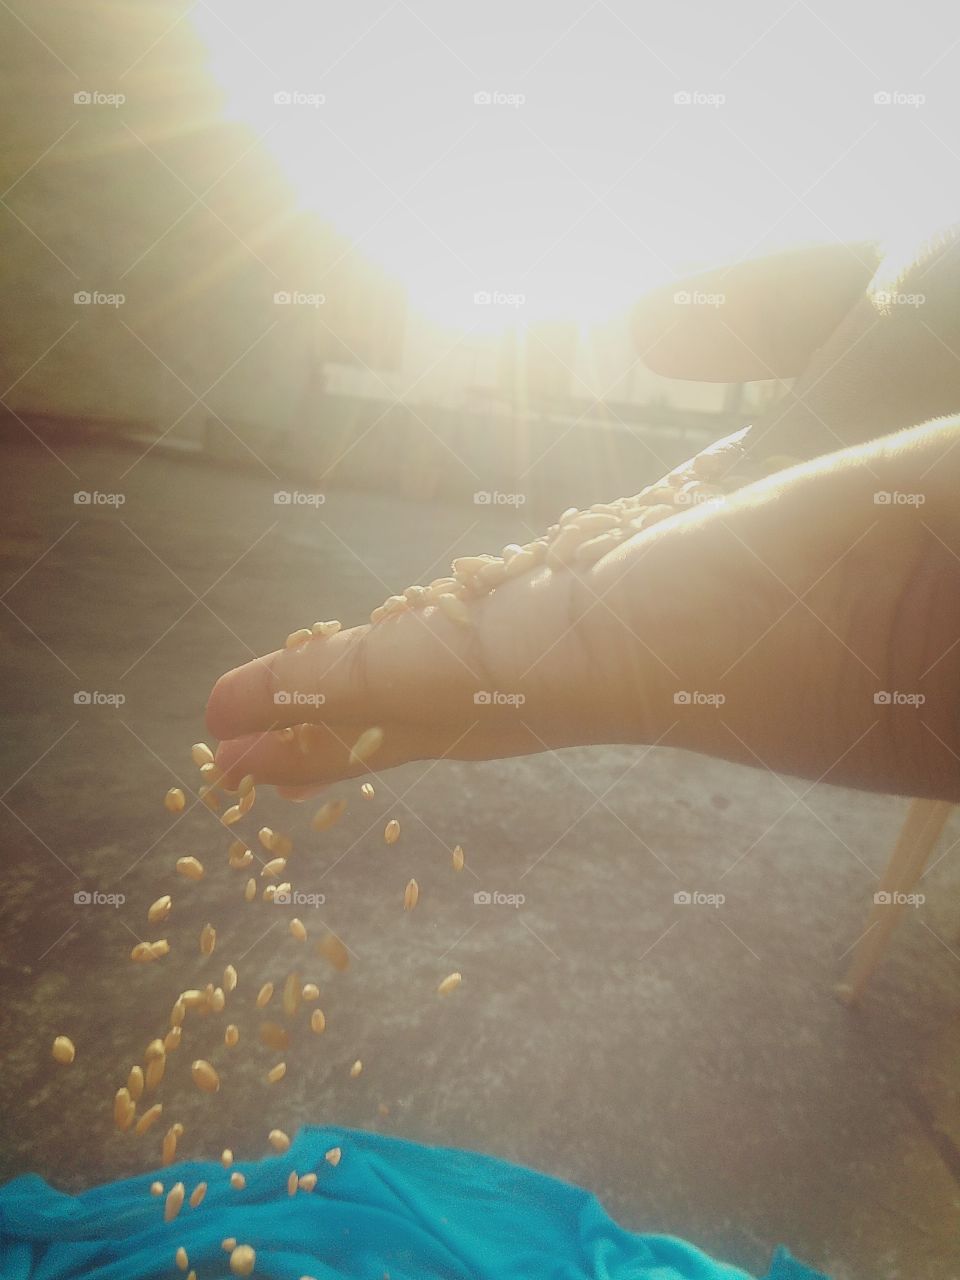 grains in hand